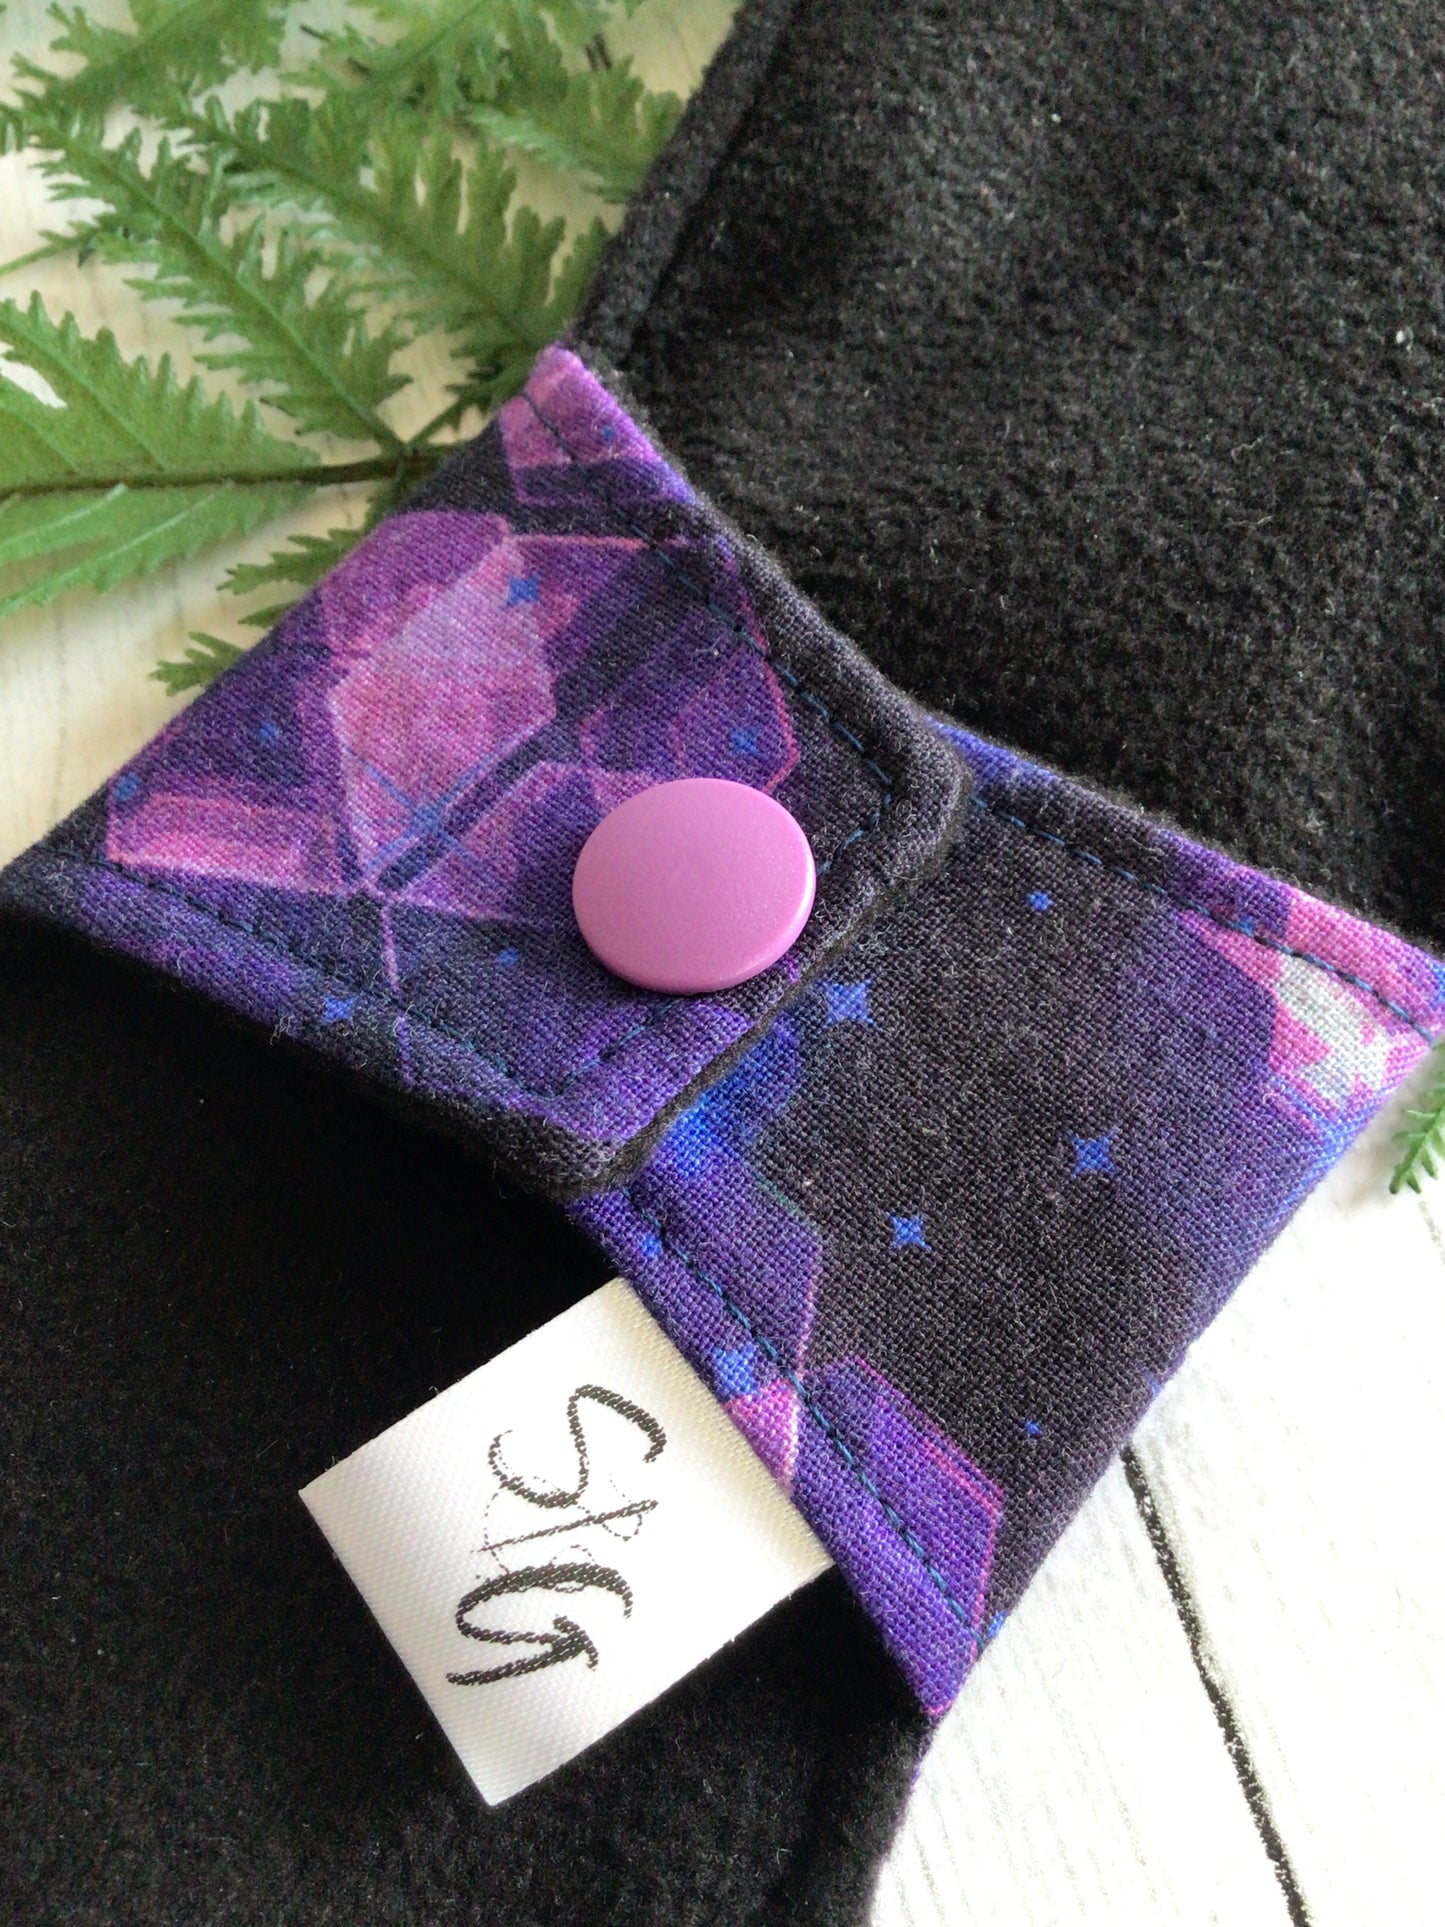 Visions of the Night cotton print cloth pads (dark purple)